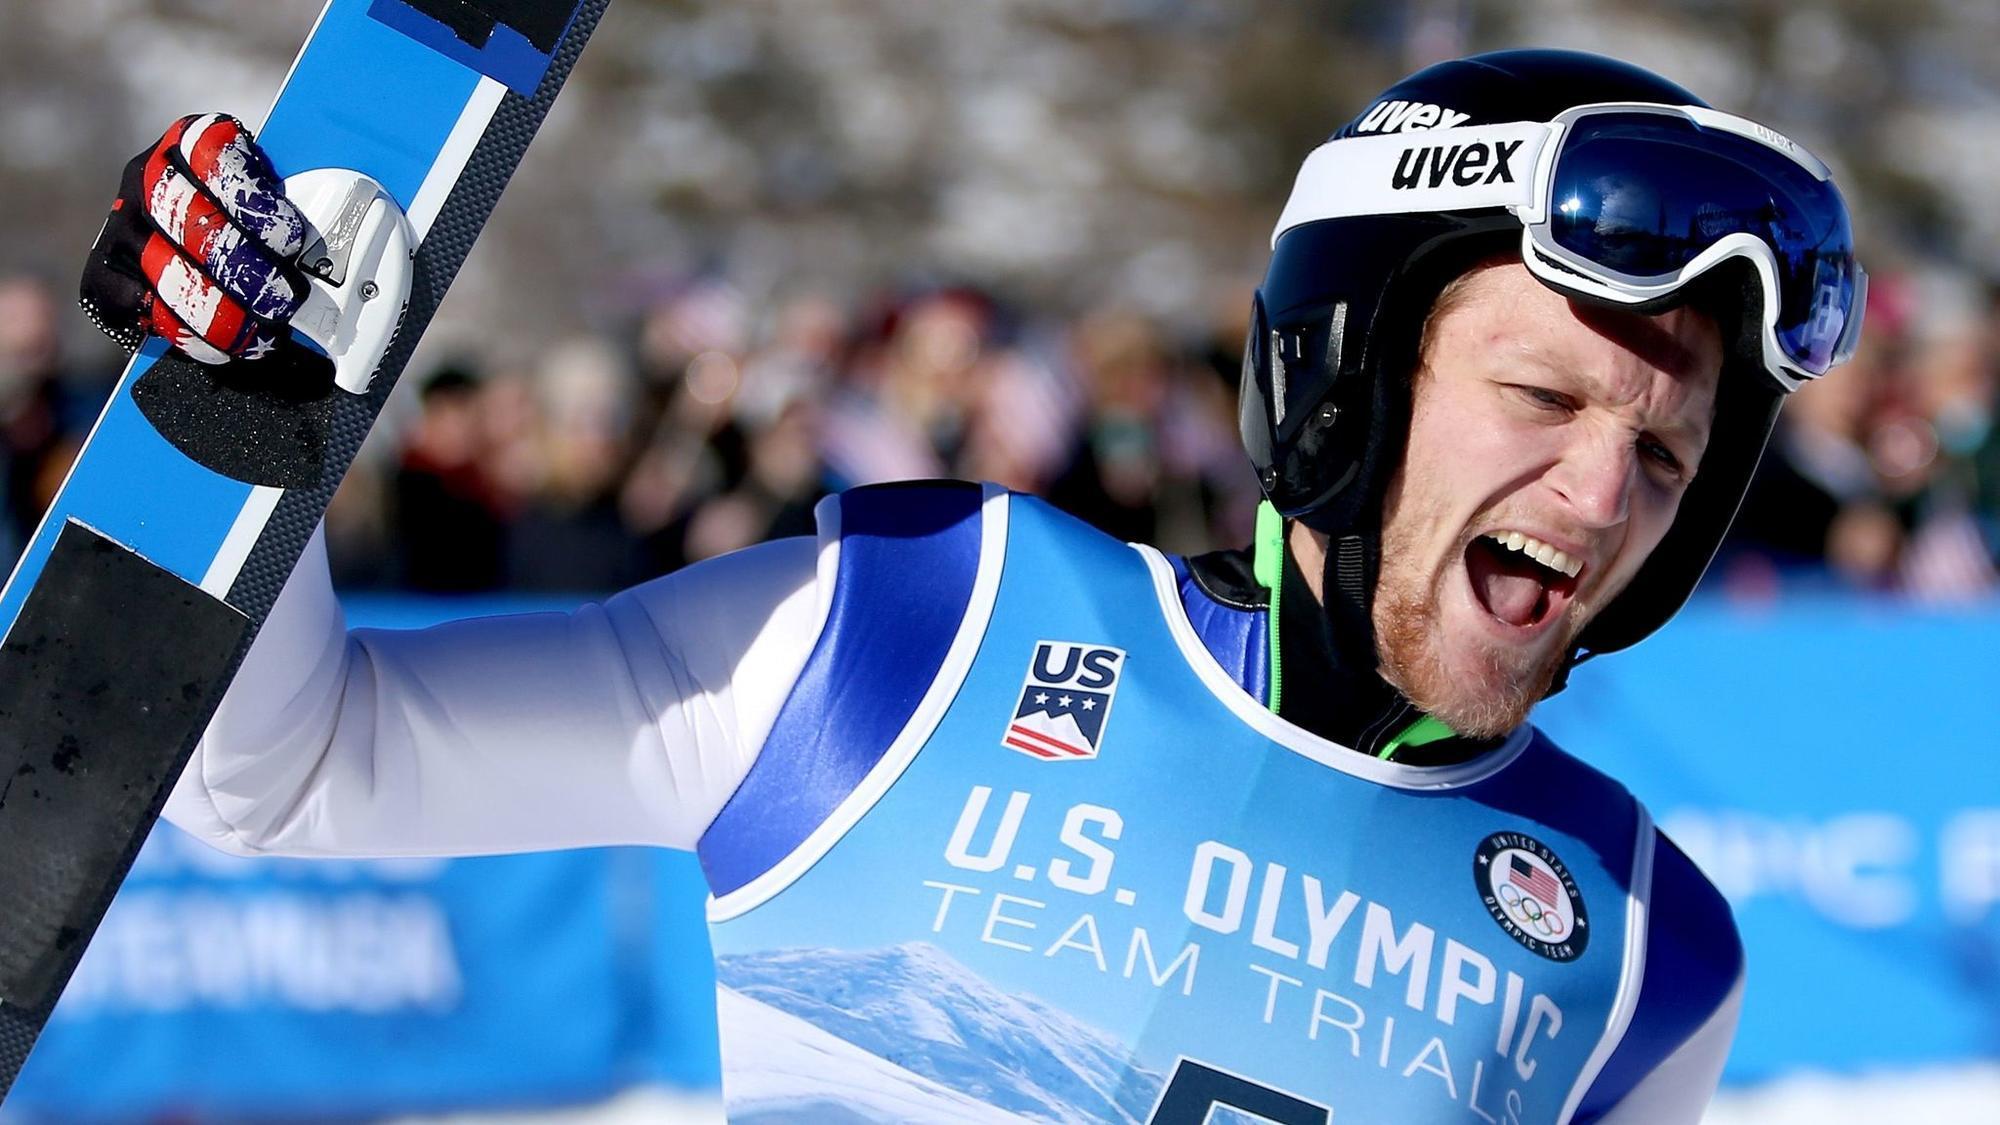 Local ski jumper makes U.S. men's team for upcoming Winter Olympics